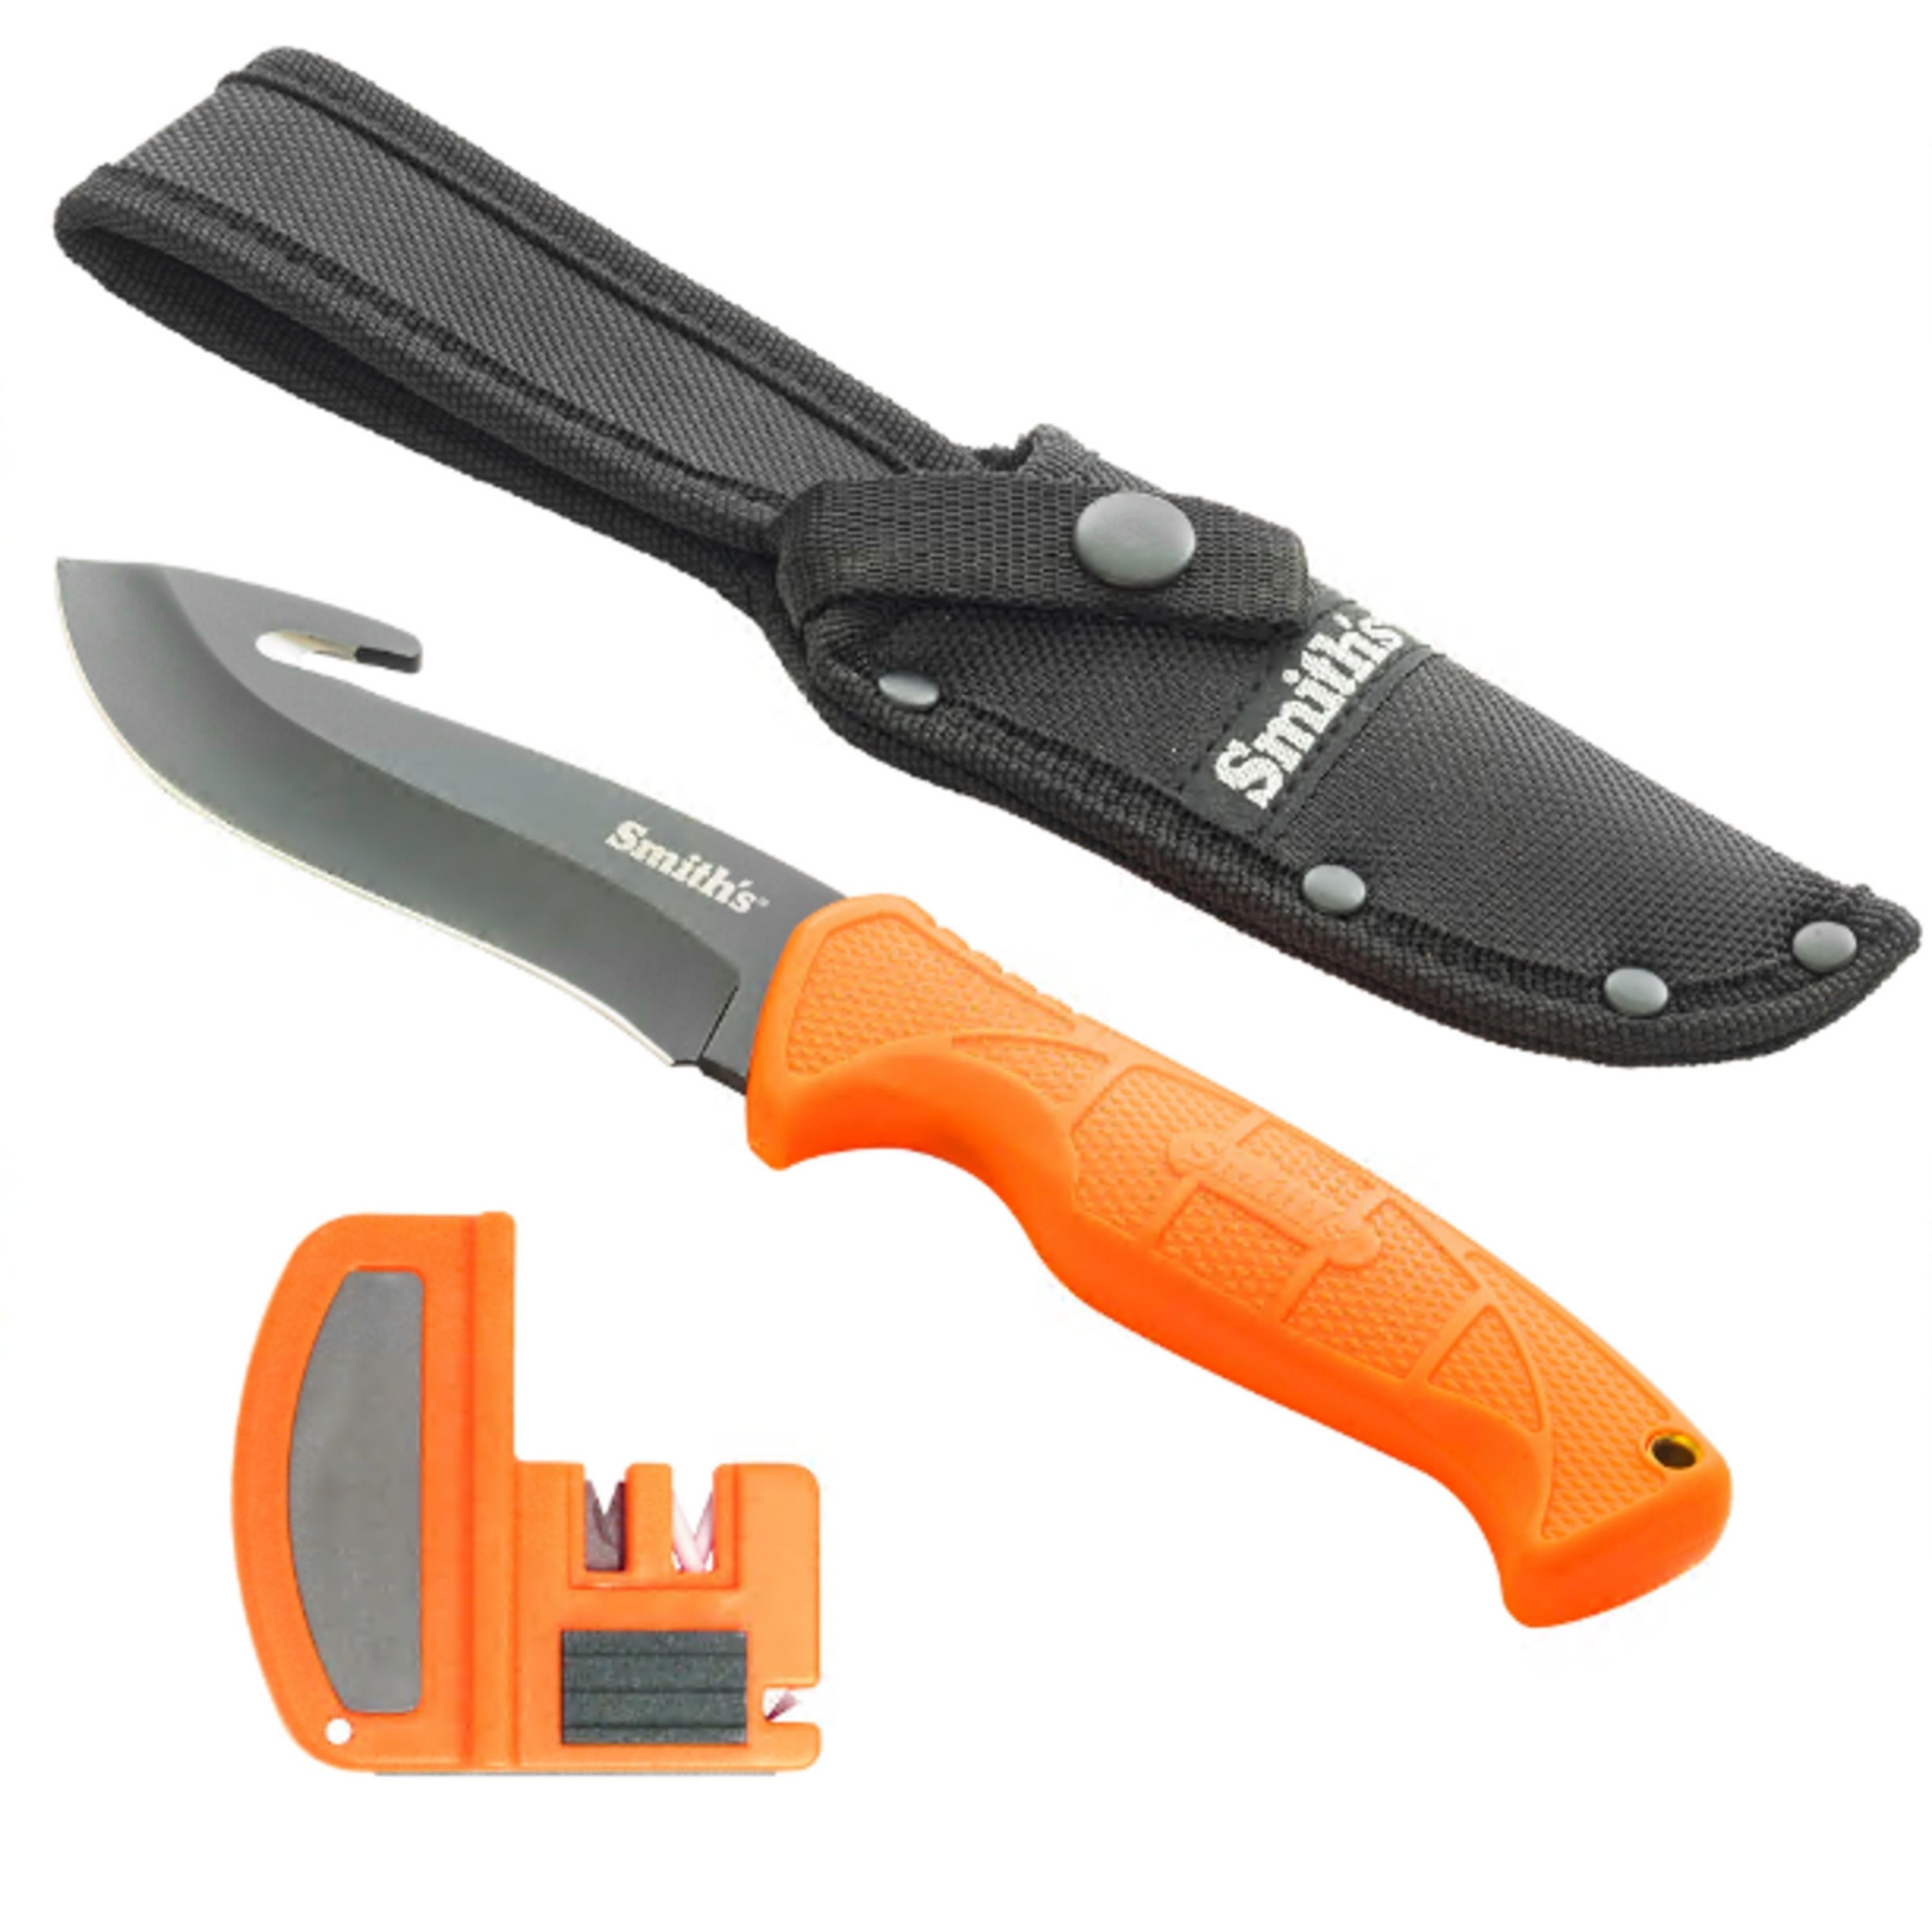 Edgesport fixed blade gut hook knive and sharpener combo — Groupe Pronature